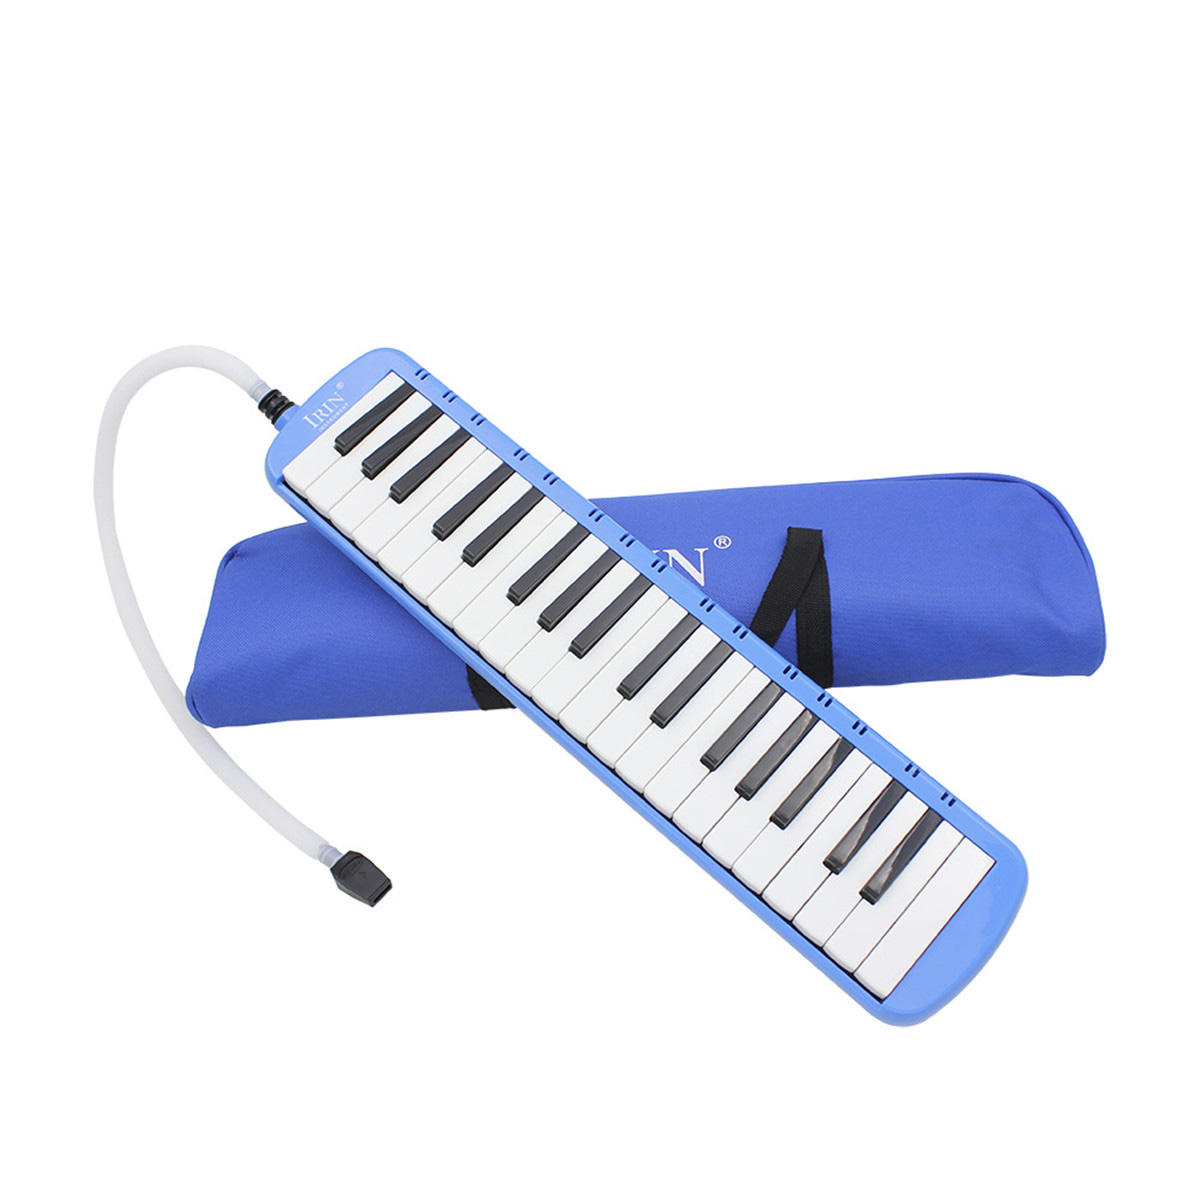 IRIN 37-Key Melodica mondharmonica elektronisch keyboard mondorgel met handtas